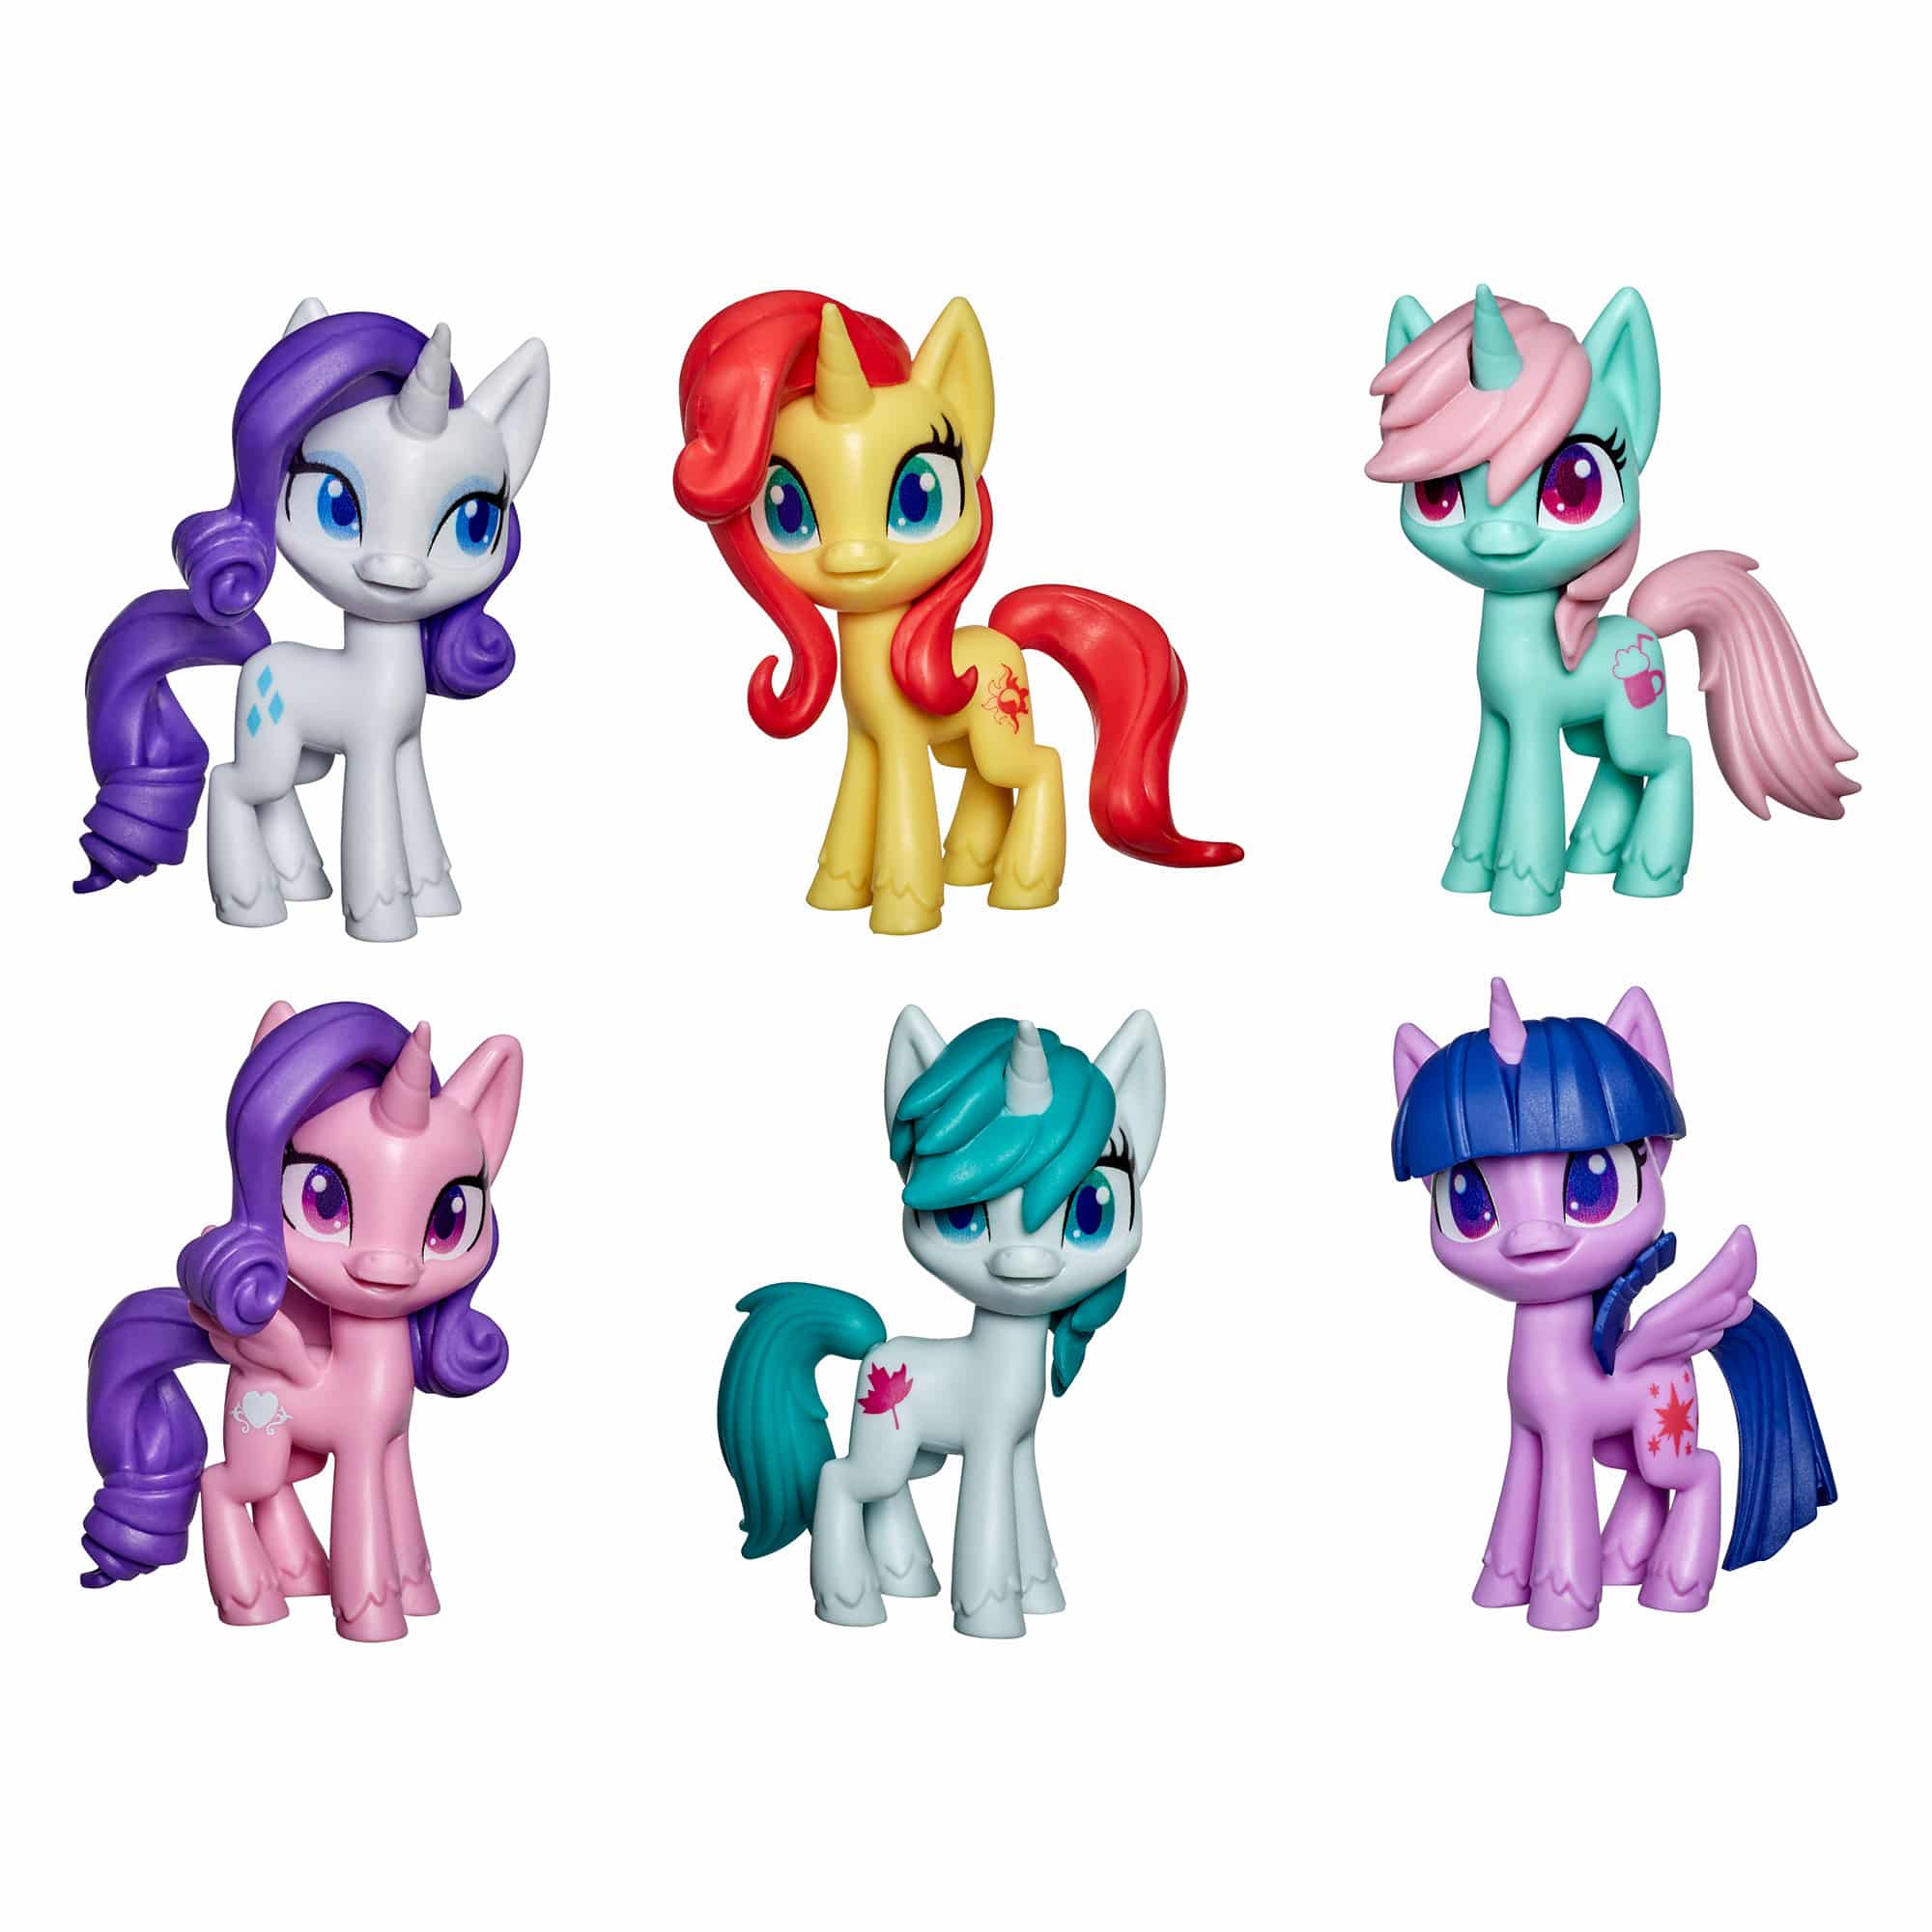 My Little Pony - 3-Inch Pony Friends Figure Assortment